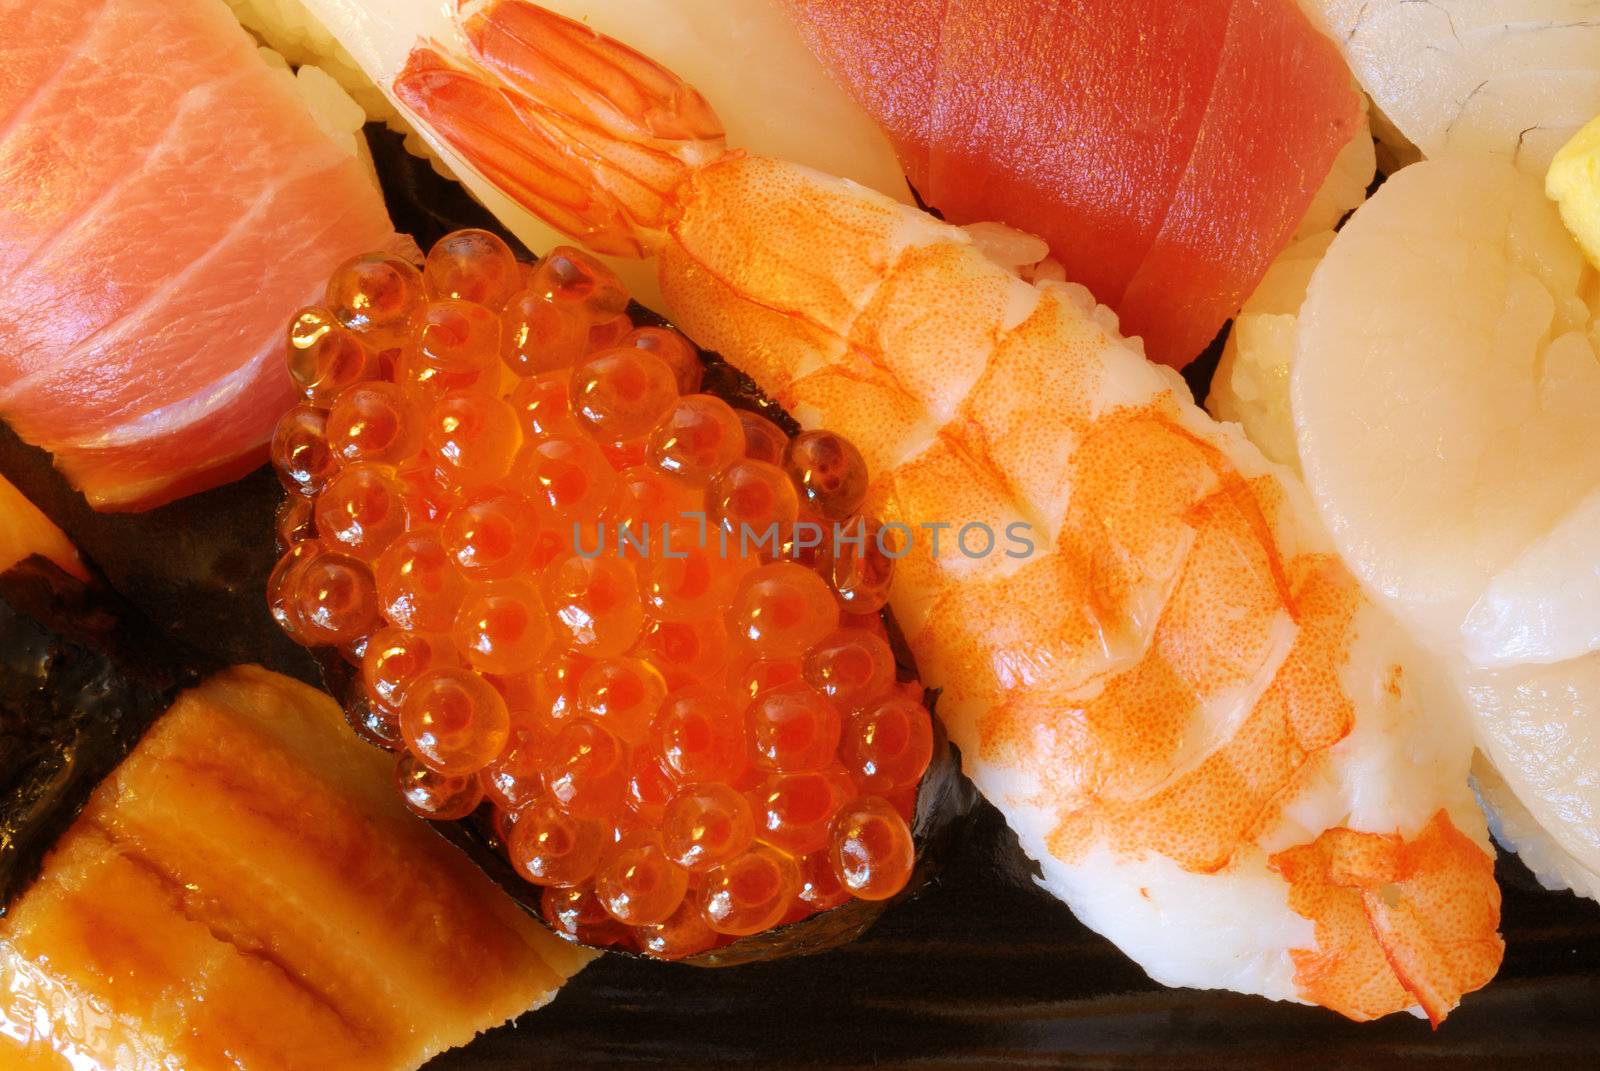  mixed traditional Japanese sushi set, close up shot